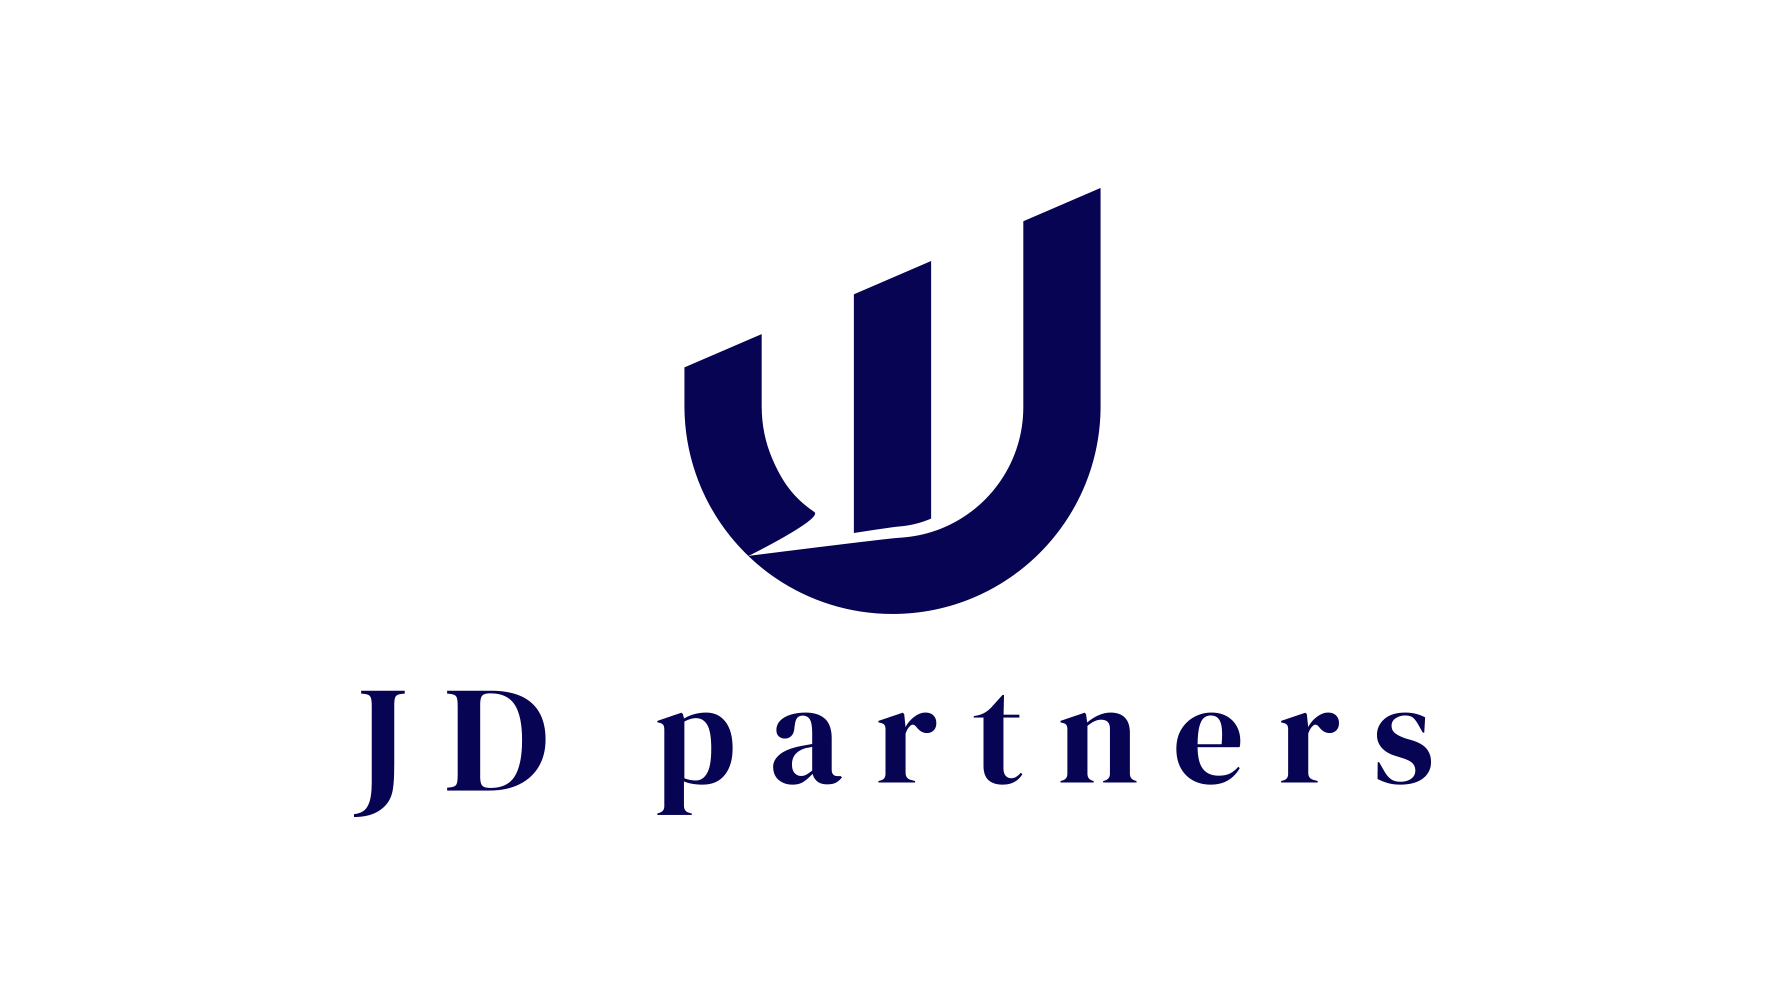 JD partners